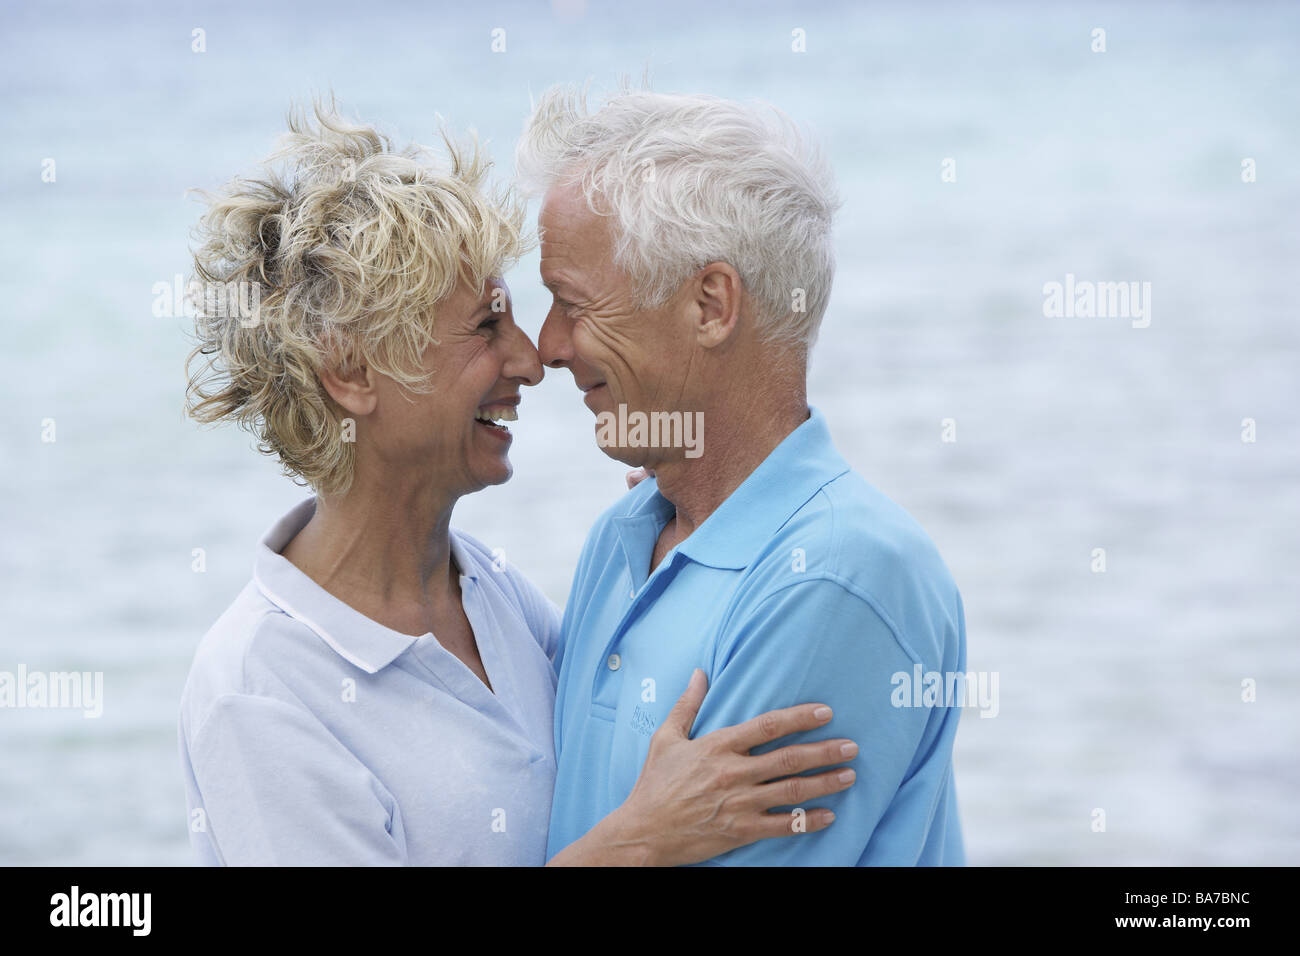 Sandy beach senior-pair embrace smiles cheerfully side-portrait series people 50-60 years 60-70 years seniors pair gaze-contact Stock Photo